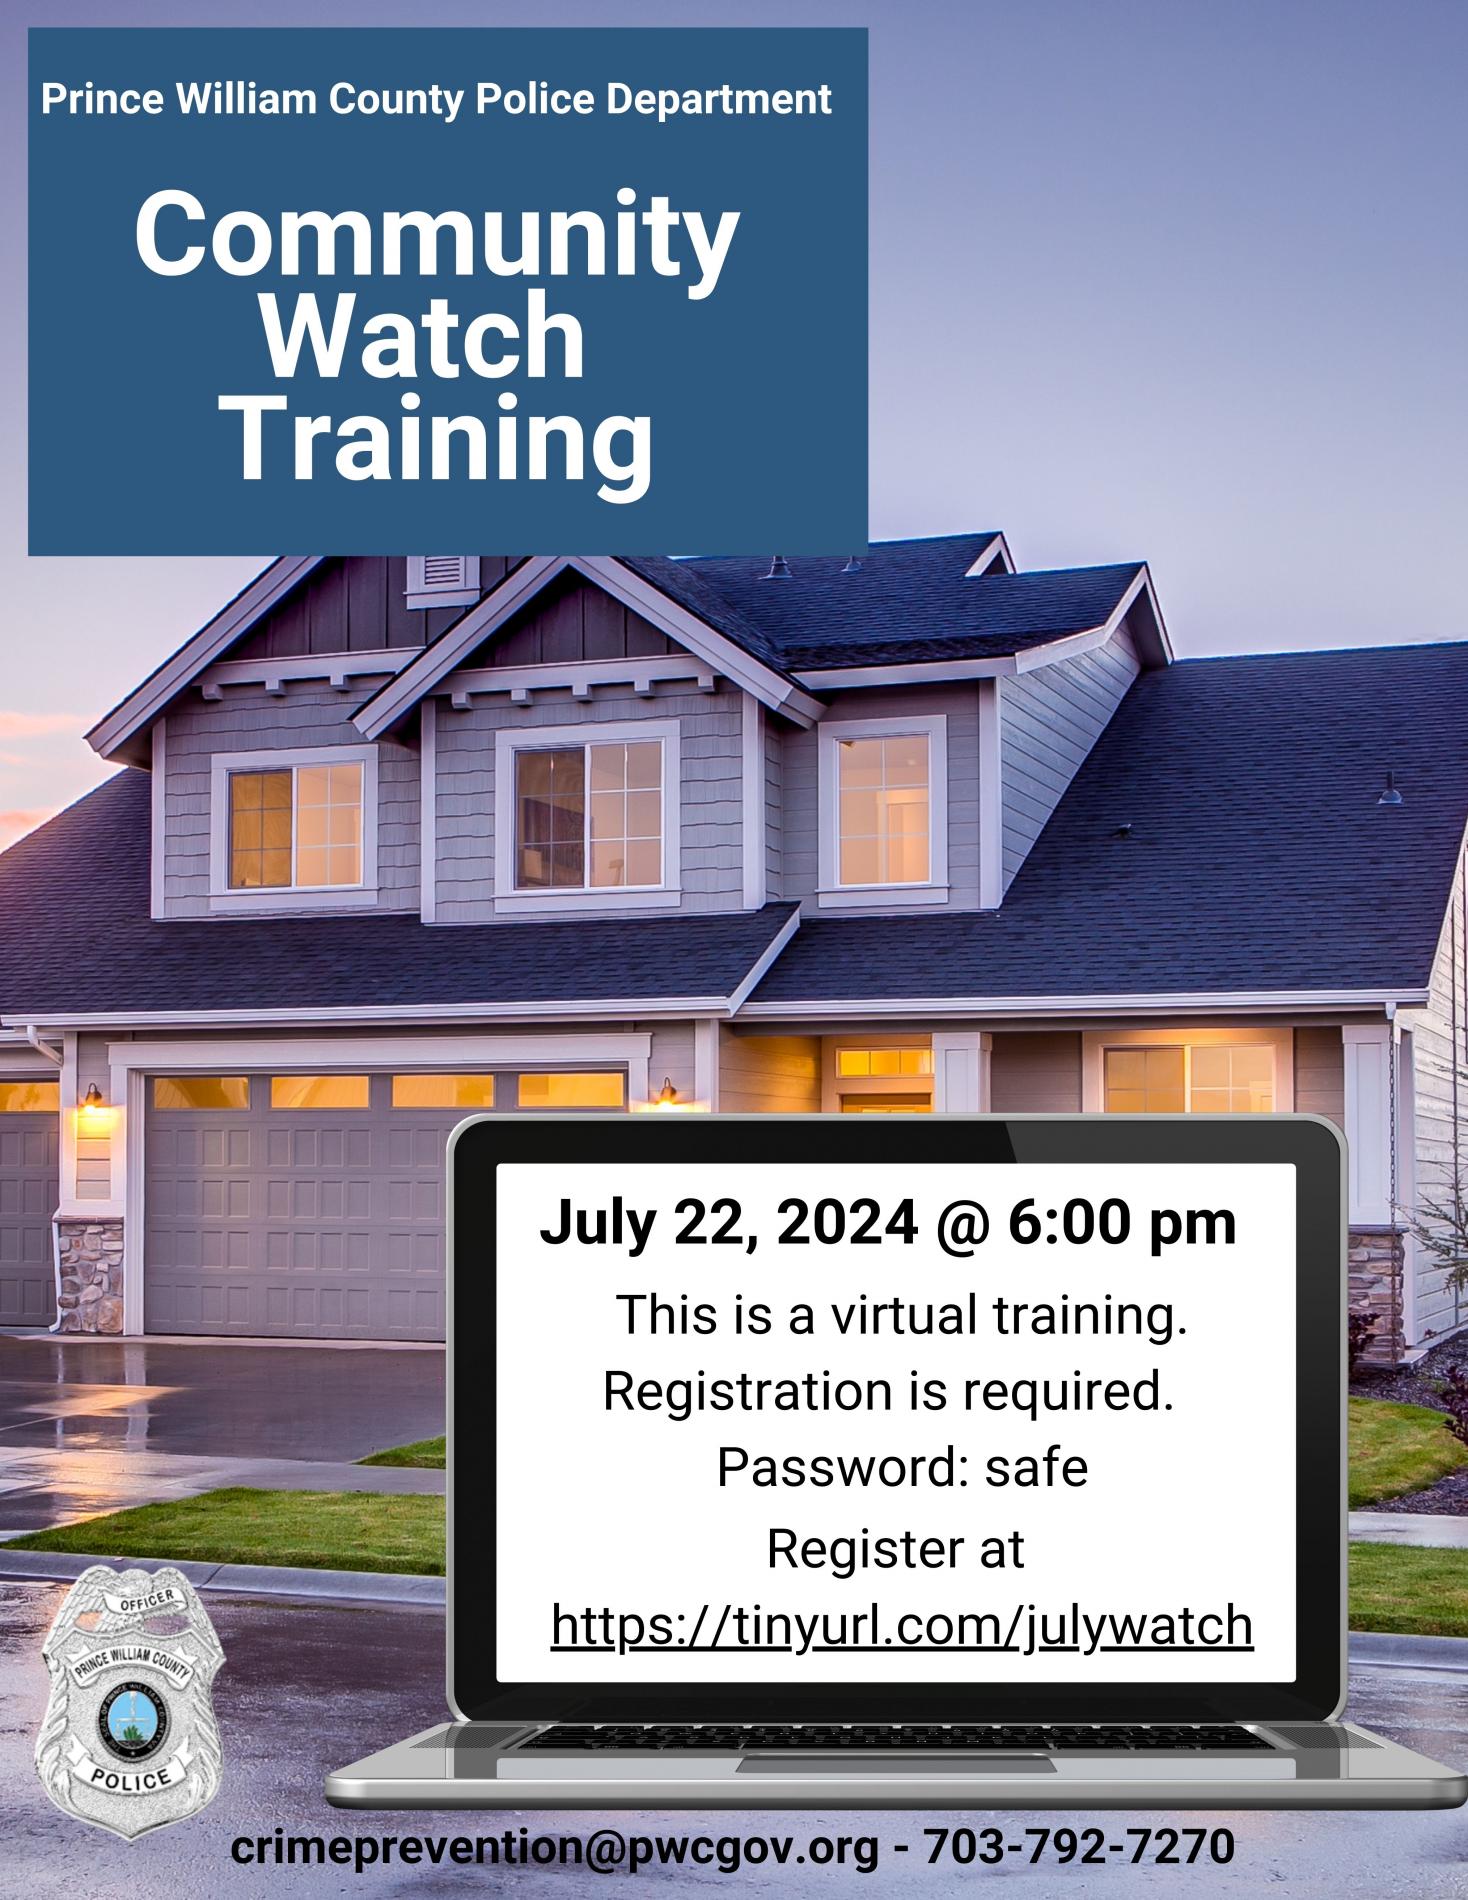 Flier about Community Watch presentation on July 22, 2024